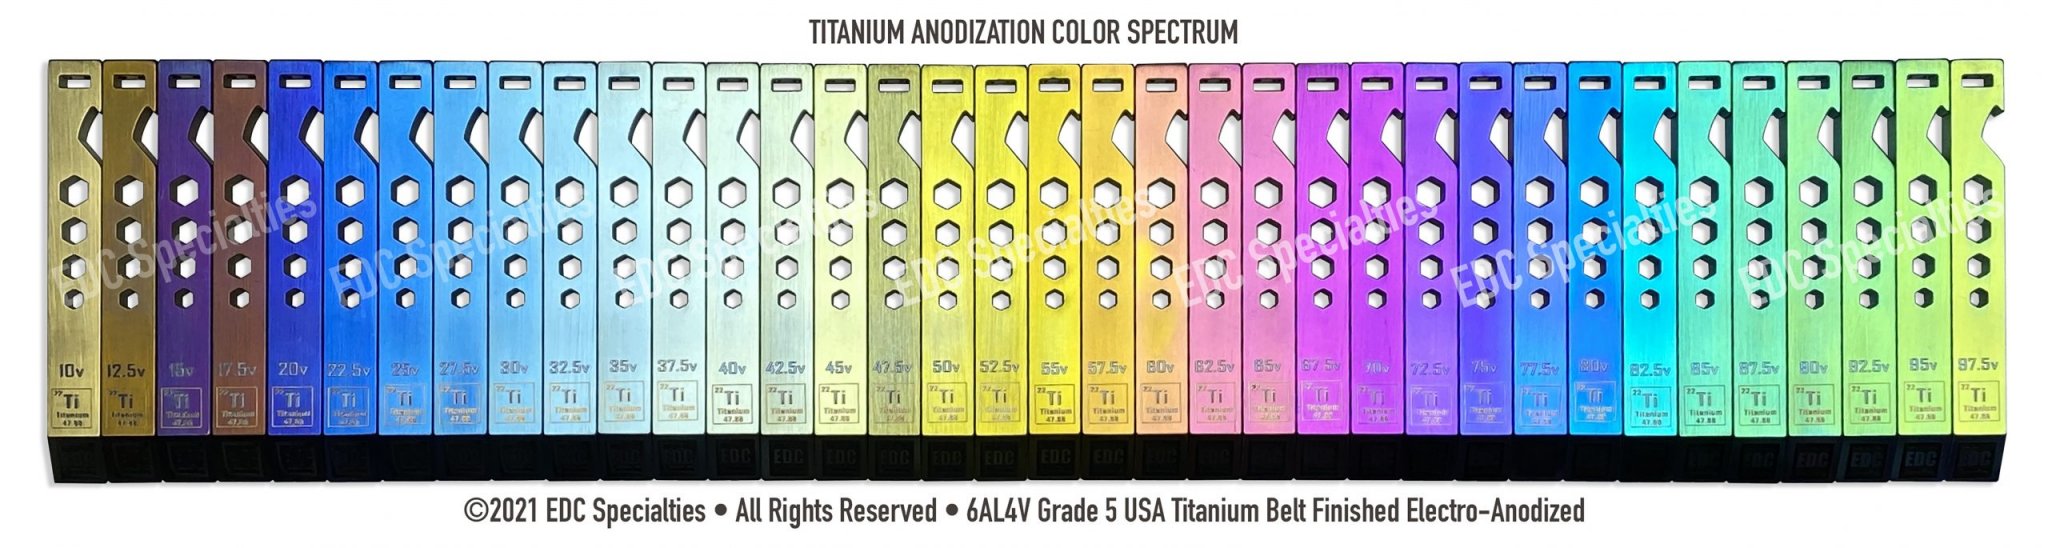 Titanium-Anodization-Chart-copy-2-scaled (2).jpg